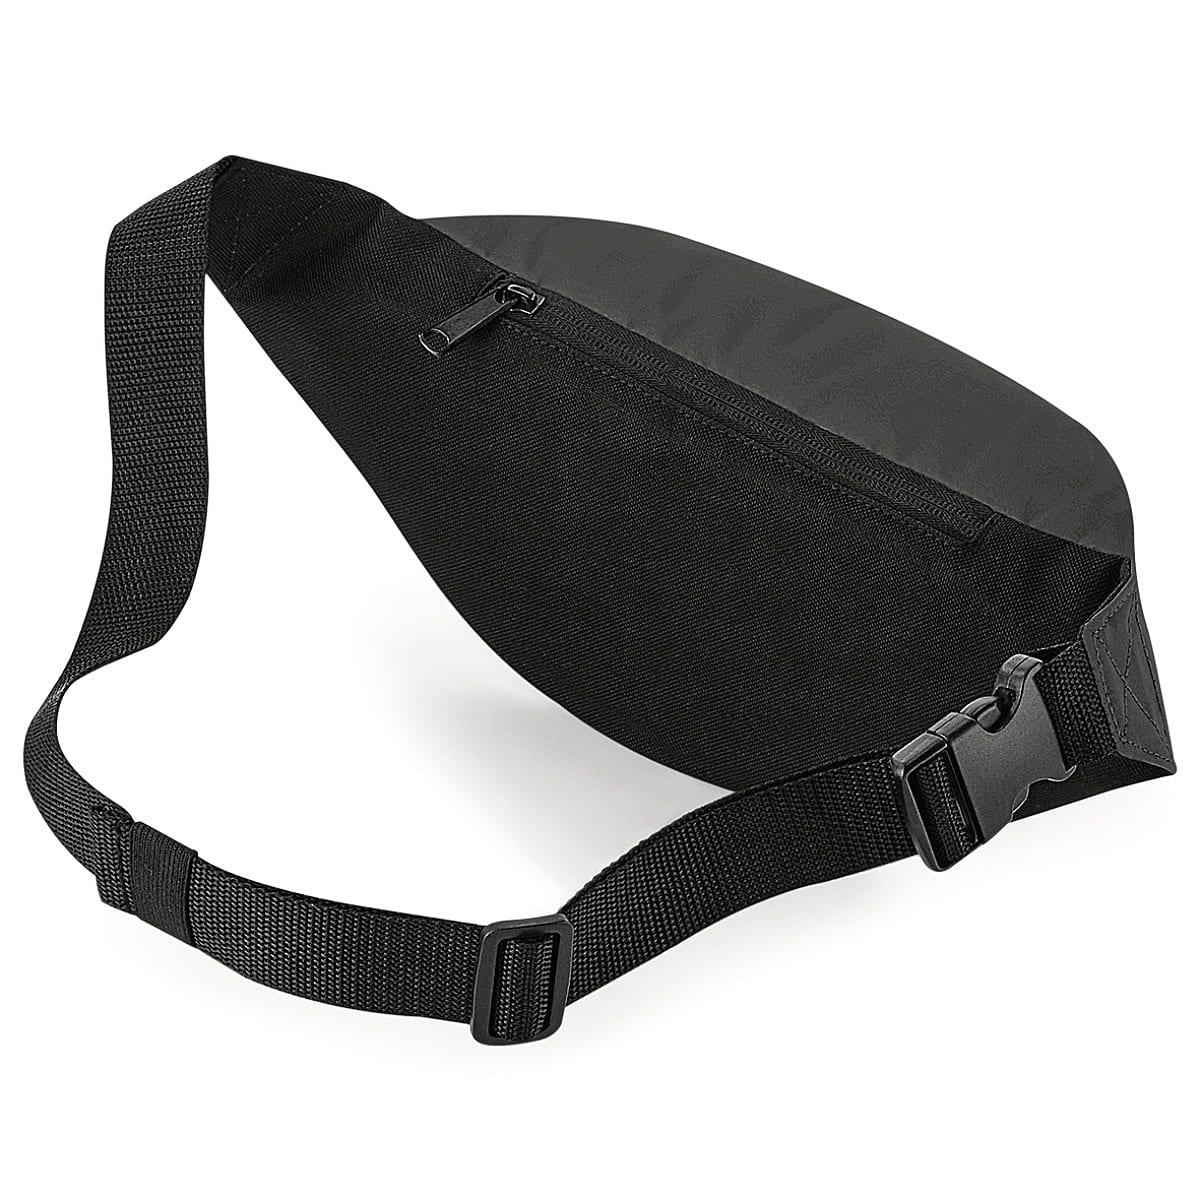 Bagbase Reflective Belt Bag in Black / Reflective (Product Code: BG134)